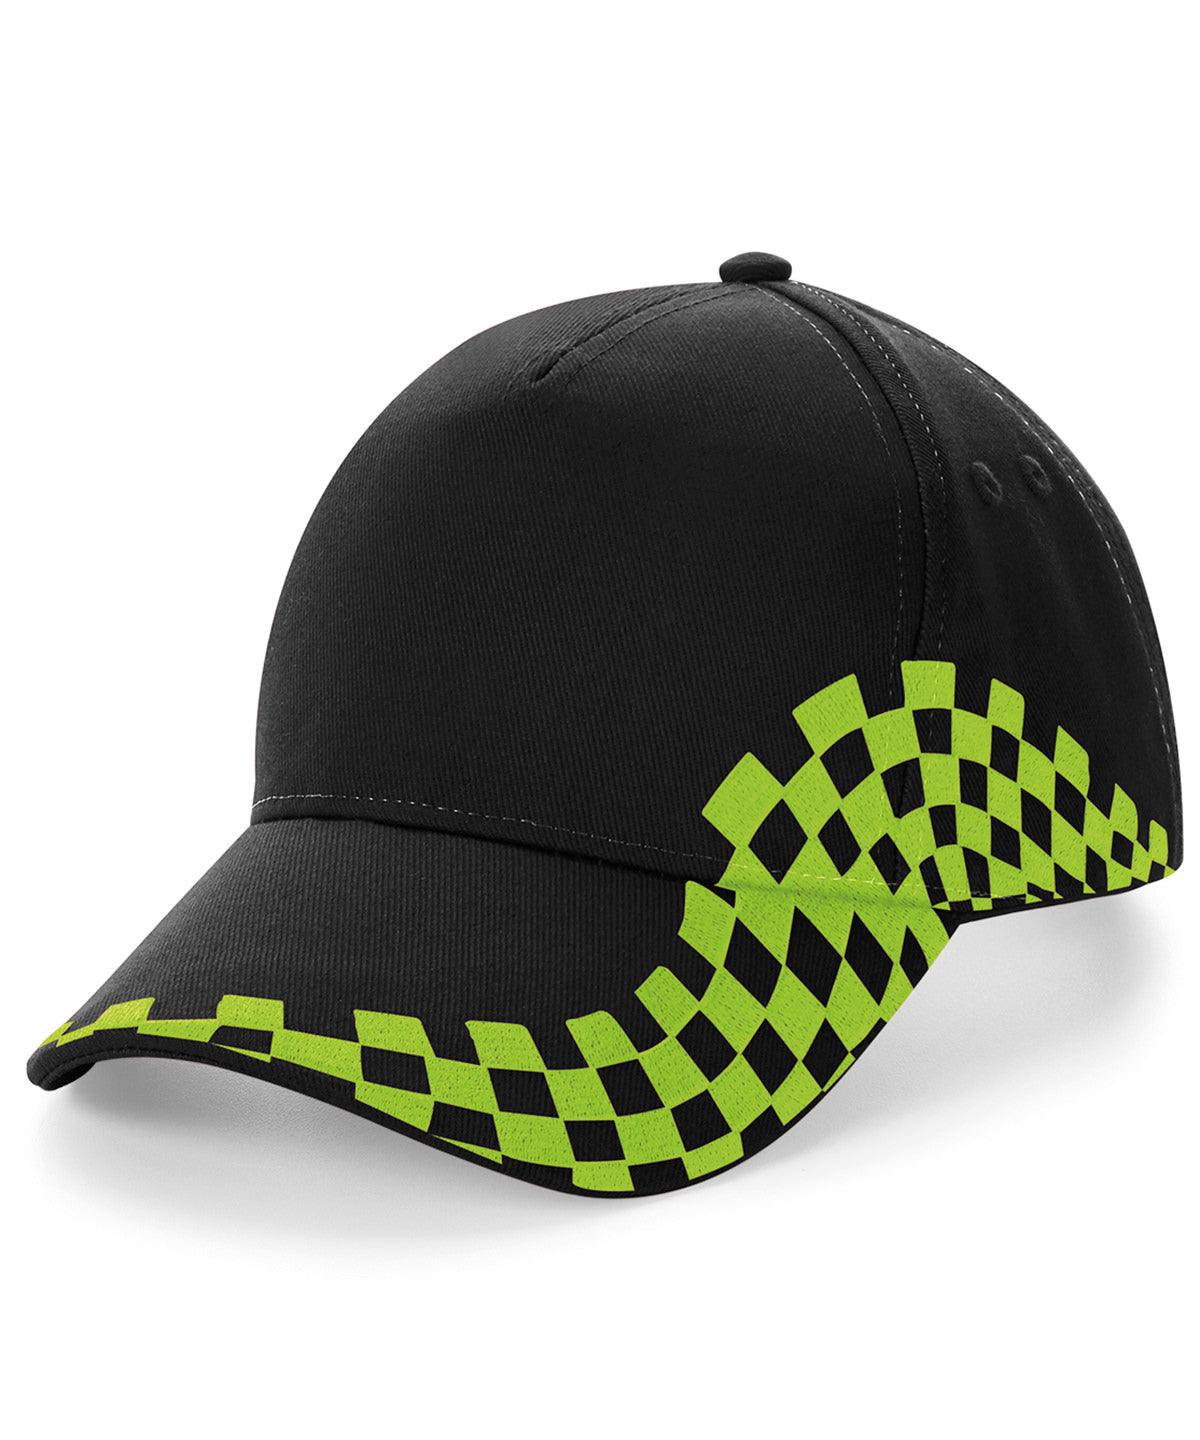 Personalised Caps - Black Beechfield Grand Prix cap